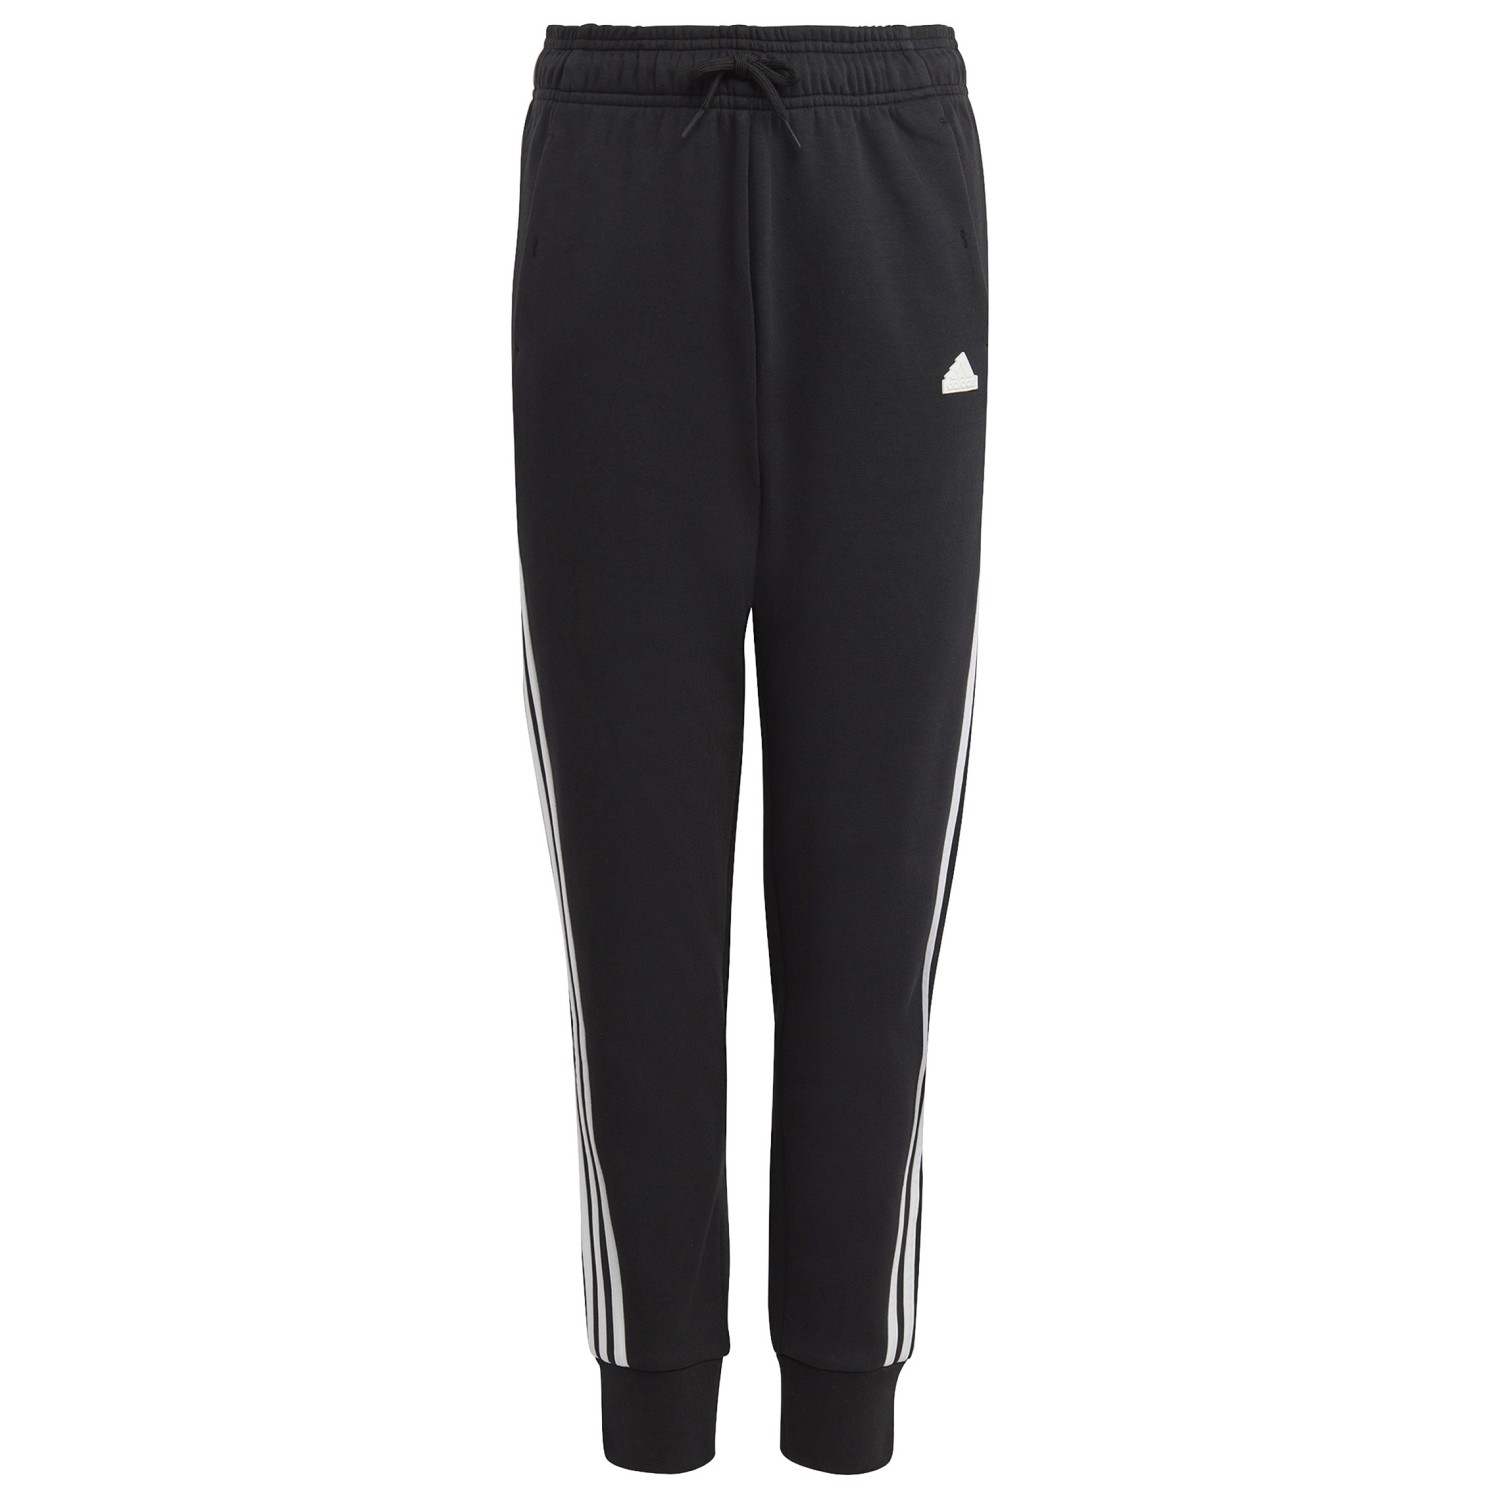 Тренировочные брюки Adidas Girl's FI 3S Pant, цвет Black/White